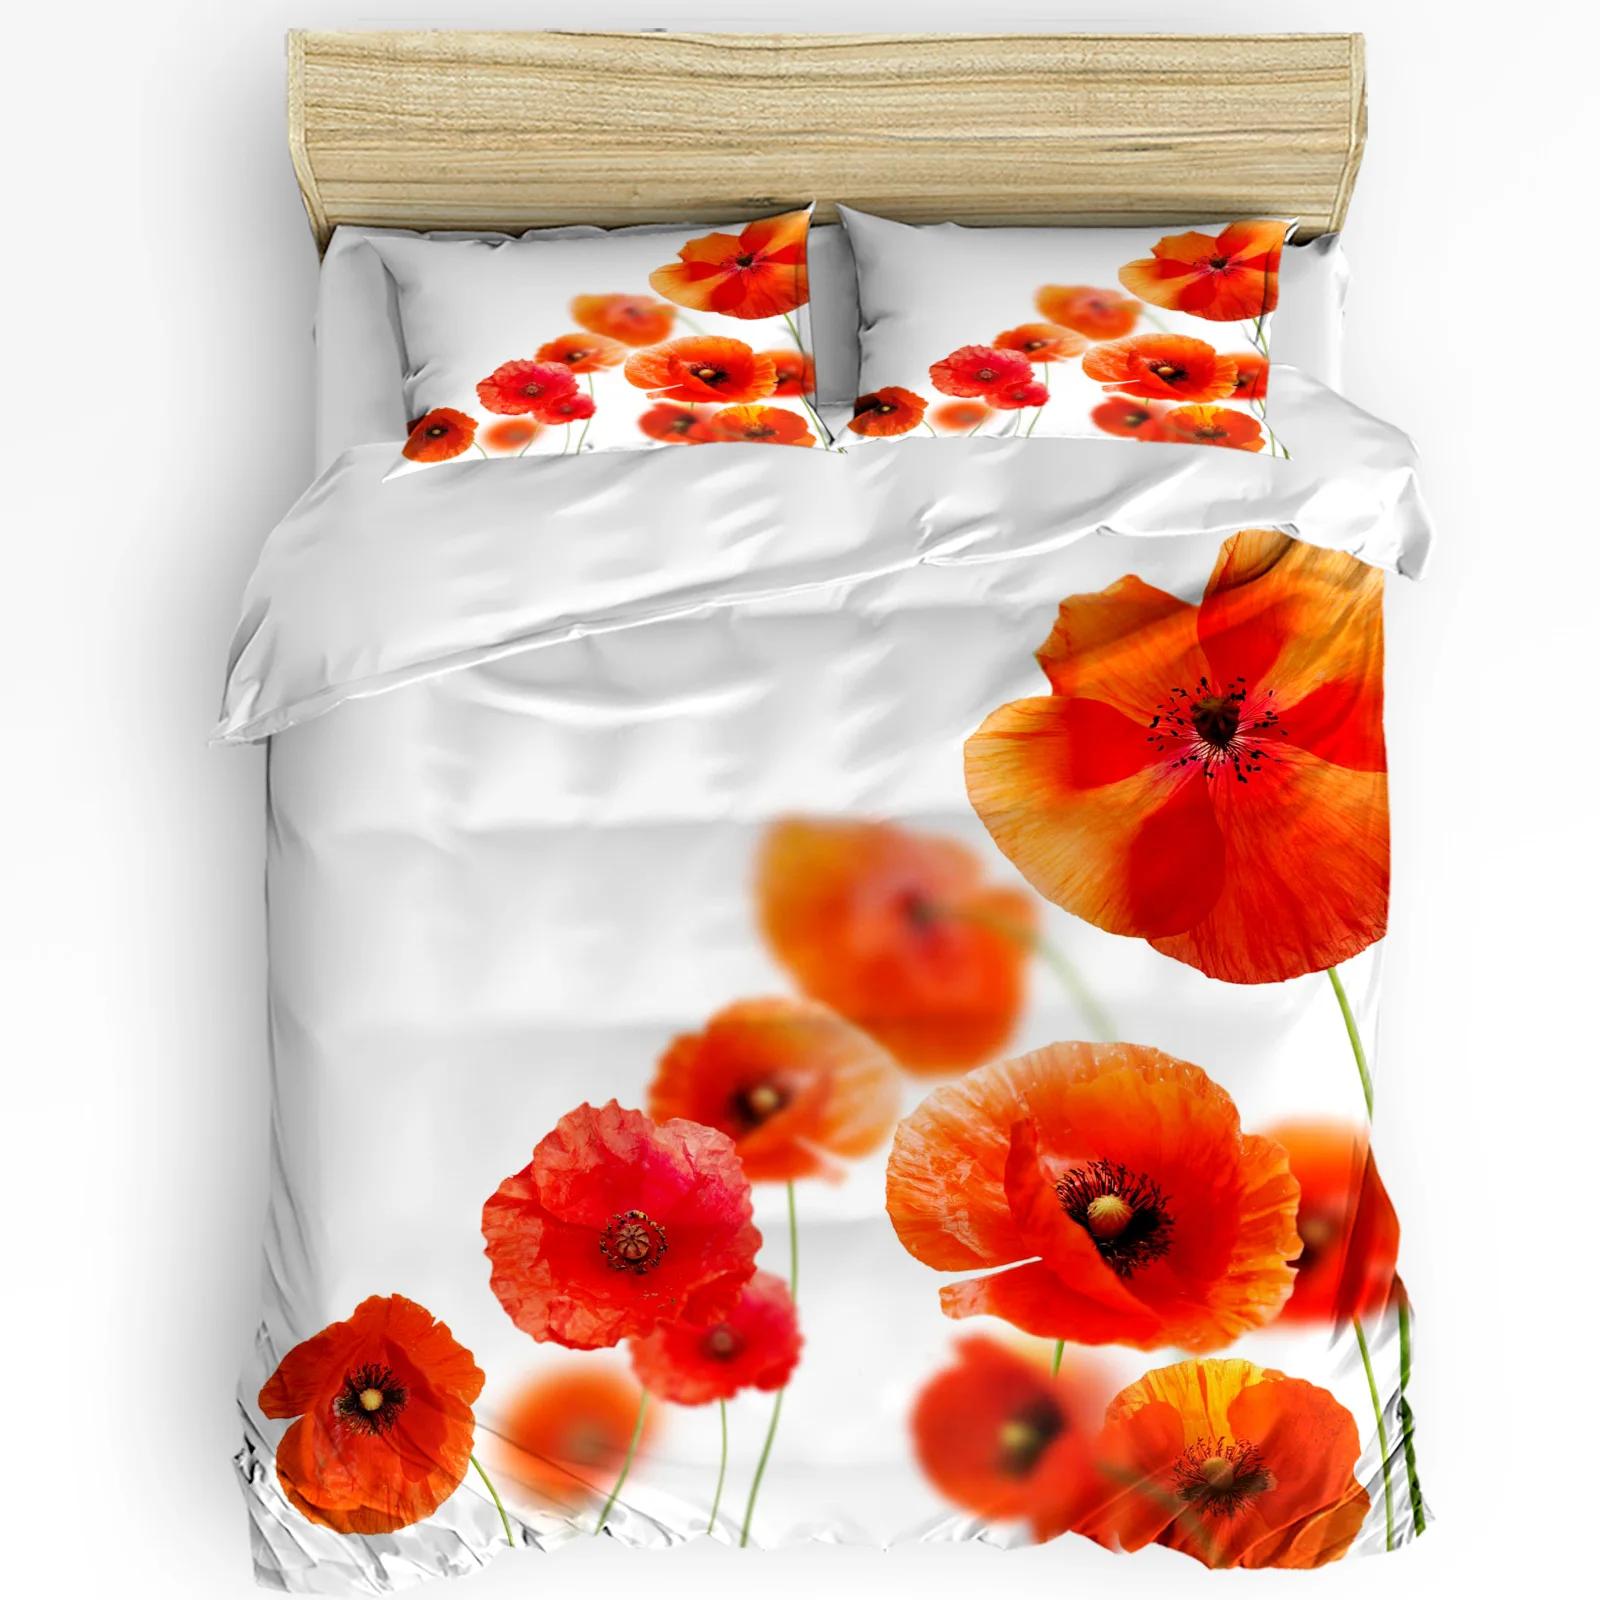 Plant Red Poppy Flower White Bedding Set 3pcs Duvet Cover Pillowcase Kids Adult Quilt Cover Double Bed Set Home Text